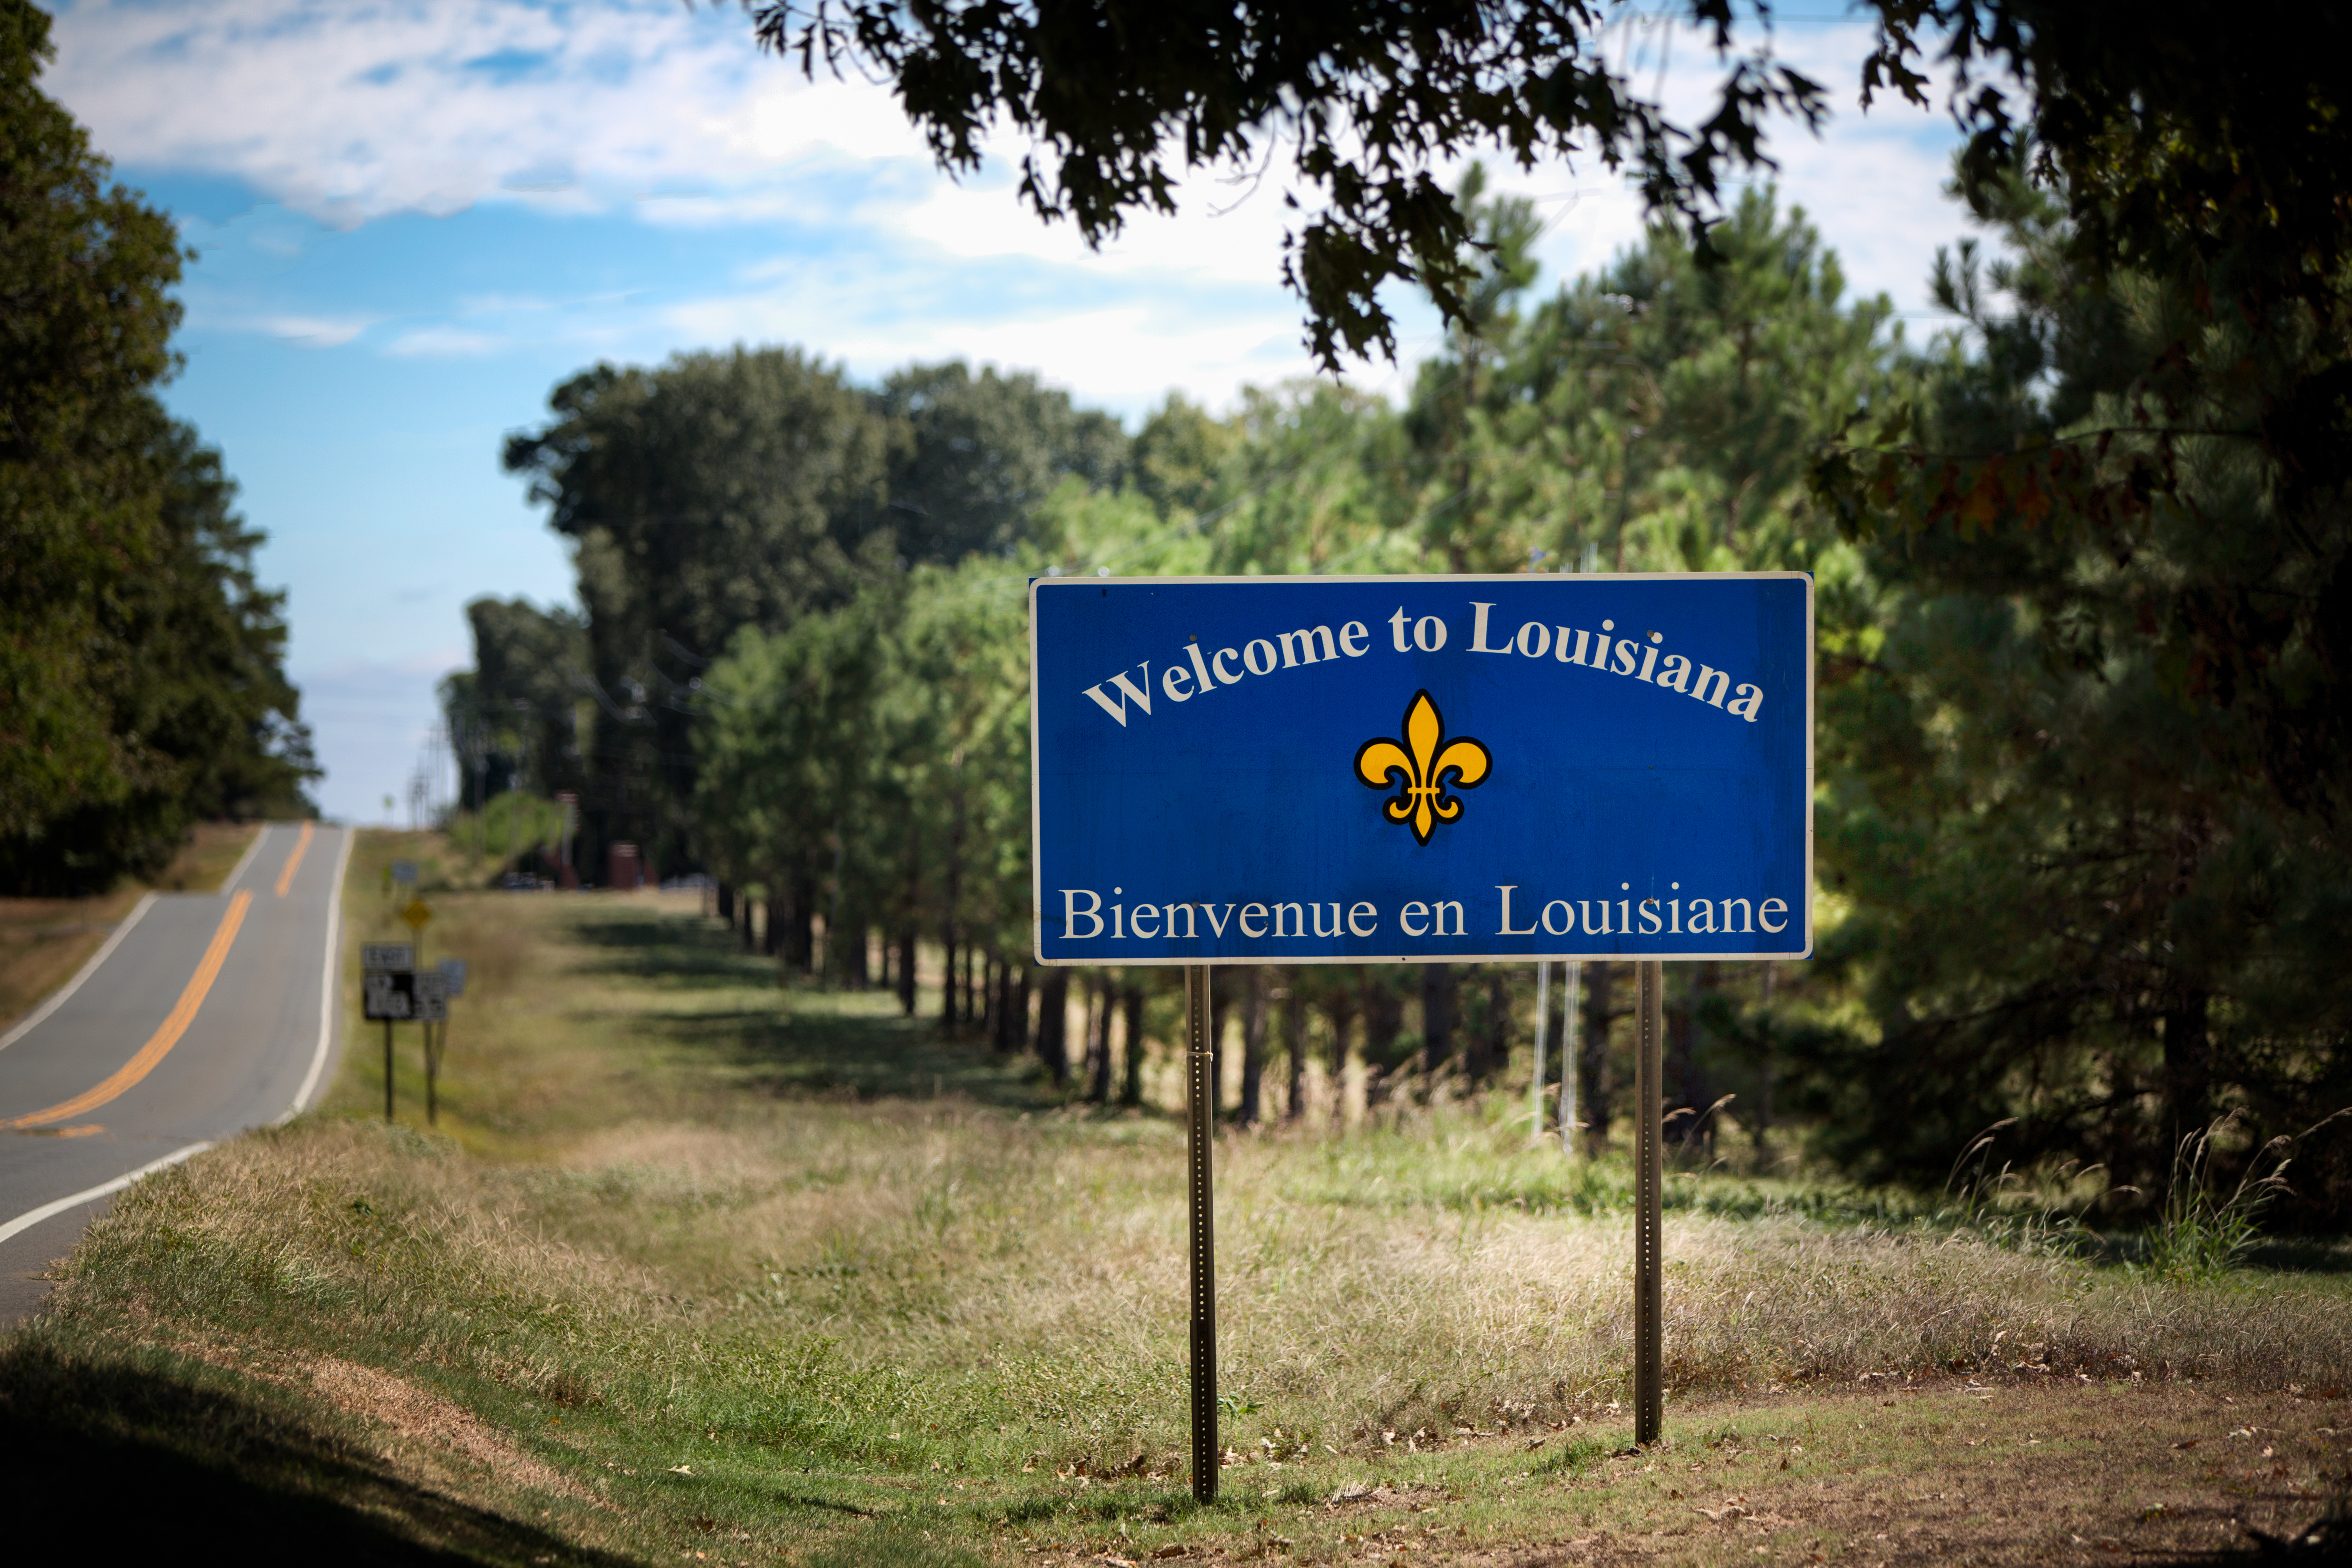 Welcome to Louisiana sign Bienvenue en Louisiane